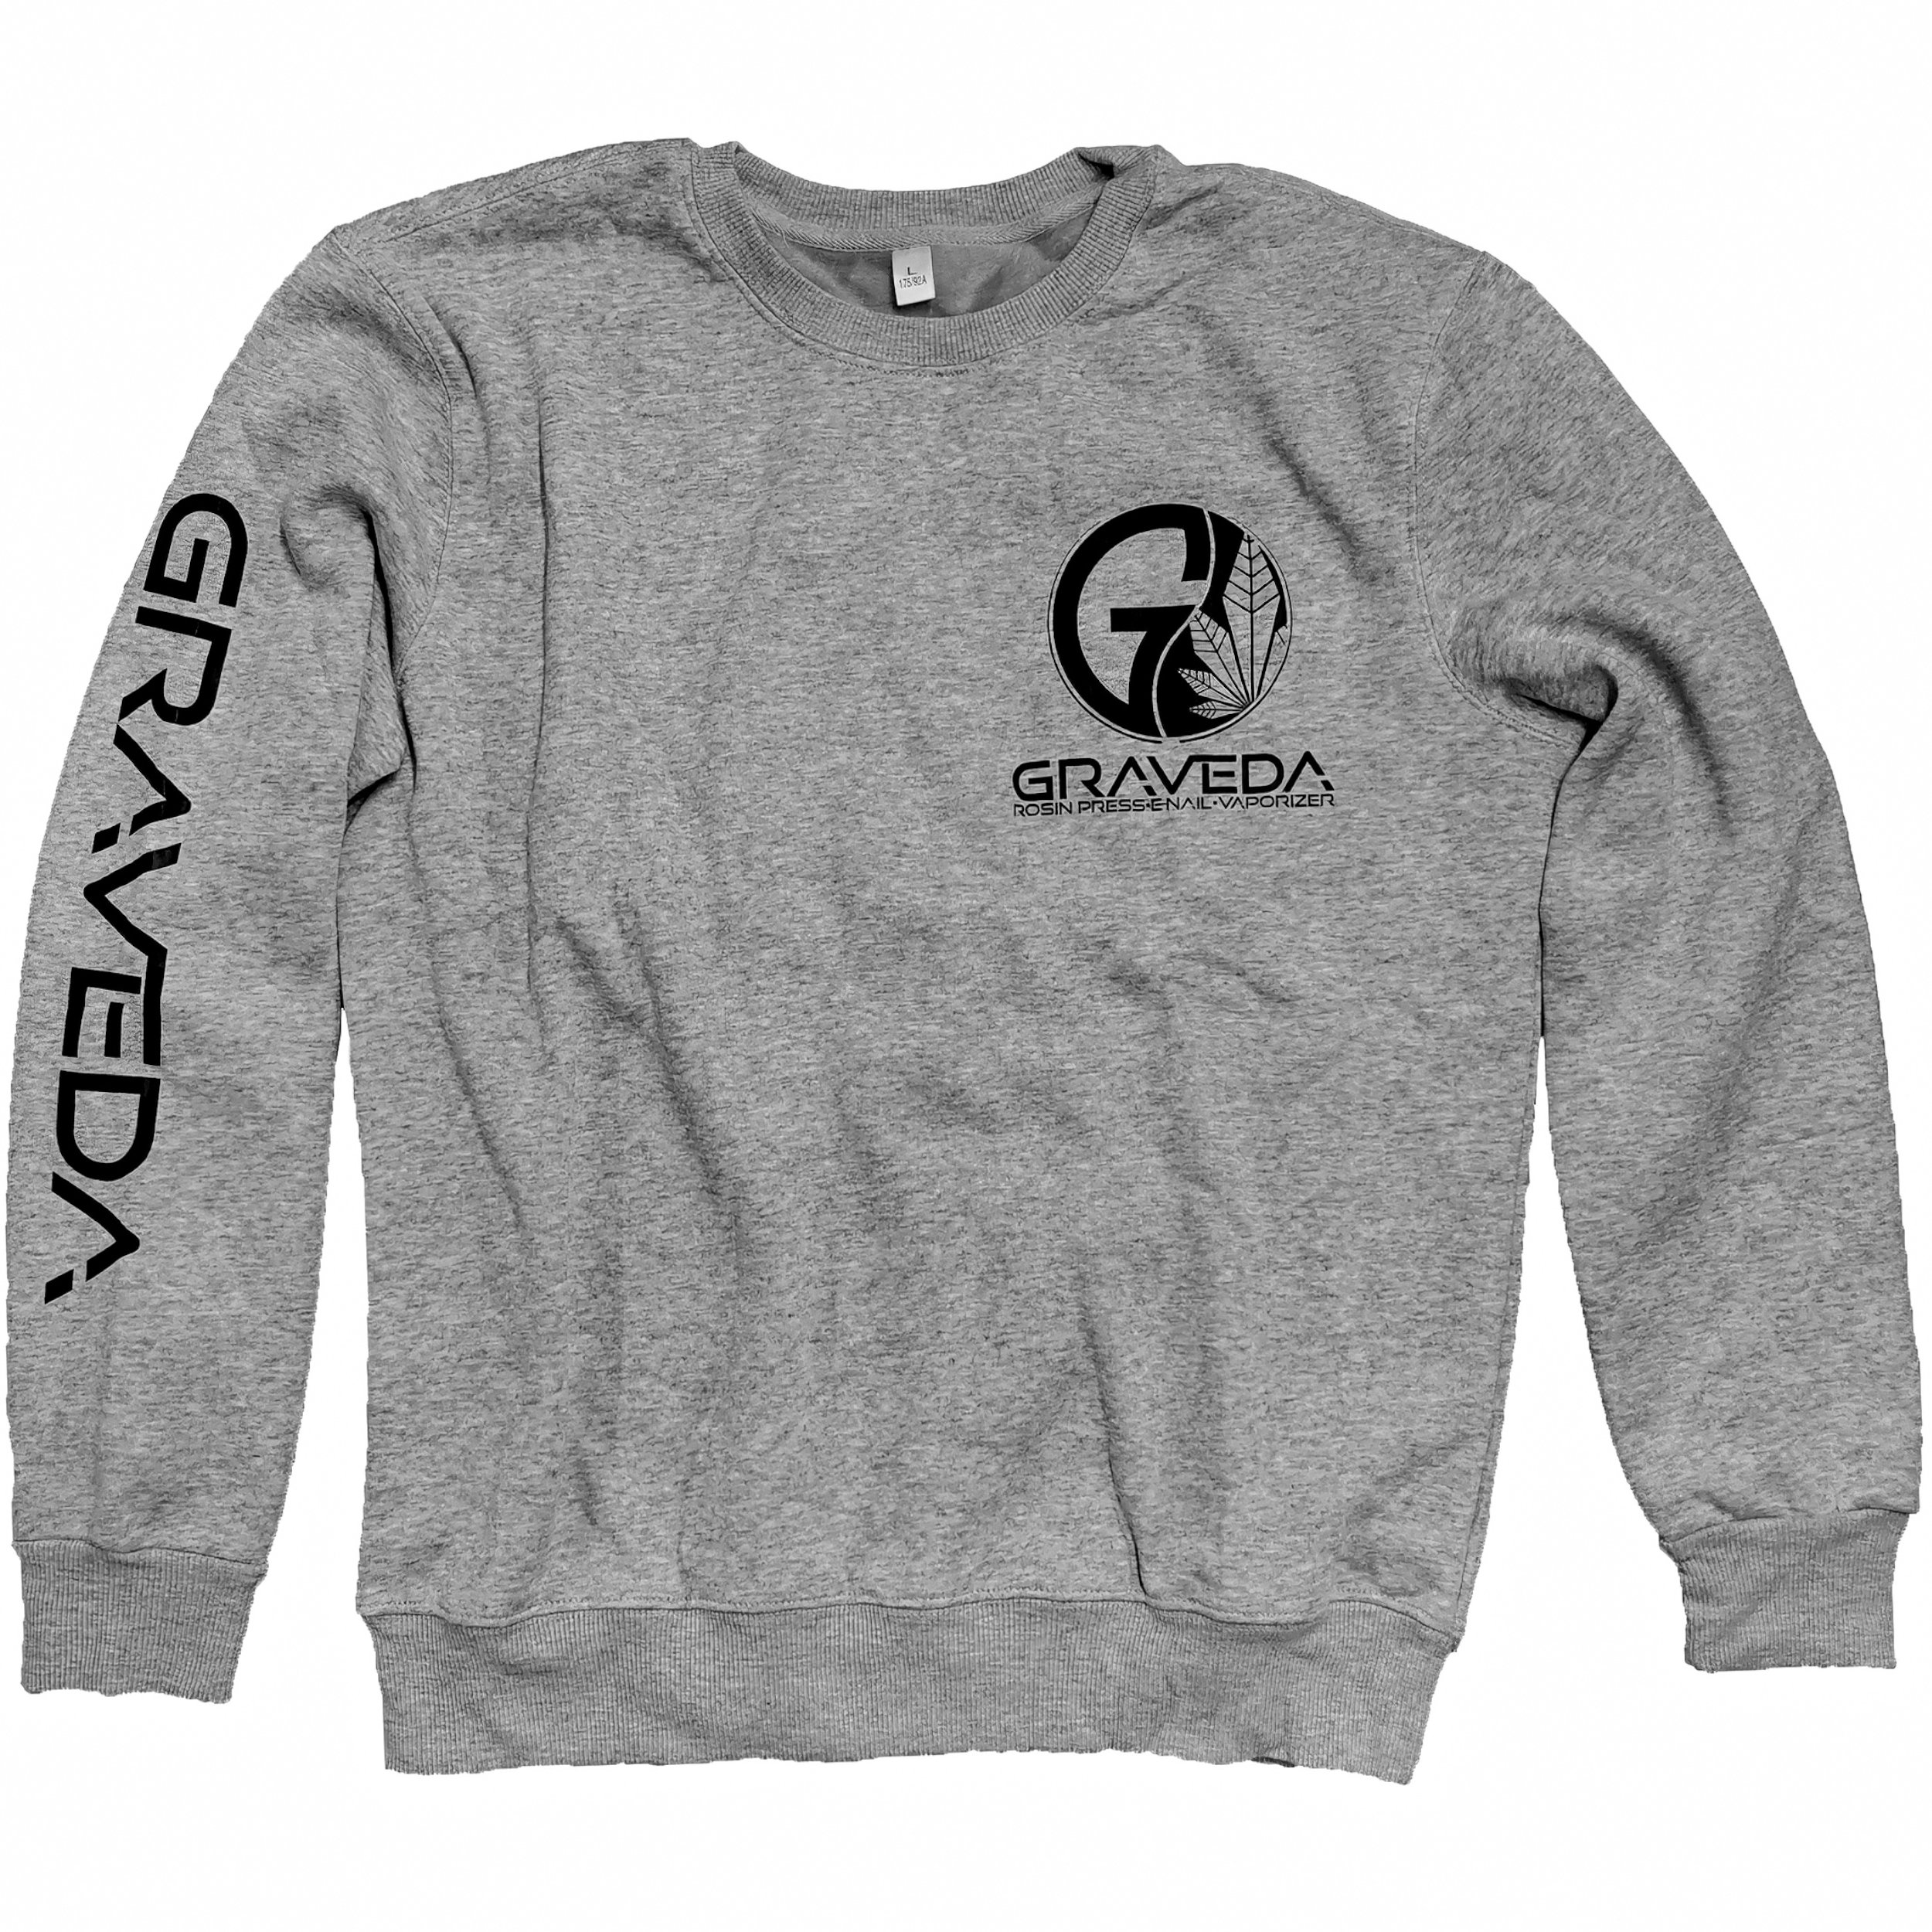 Graveda Sweatshirt, 280g/m², in schwarz oder grau grau L